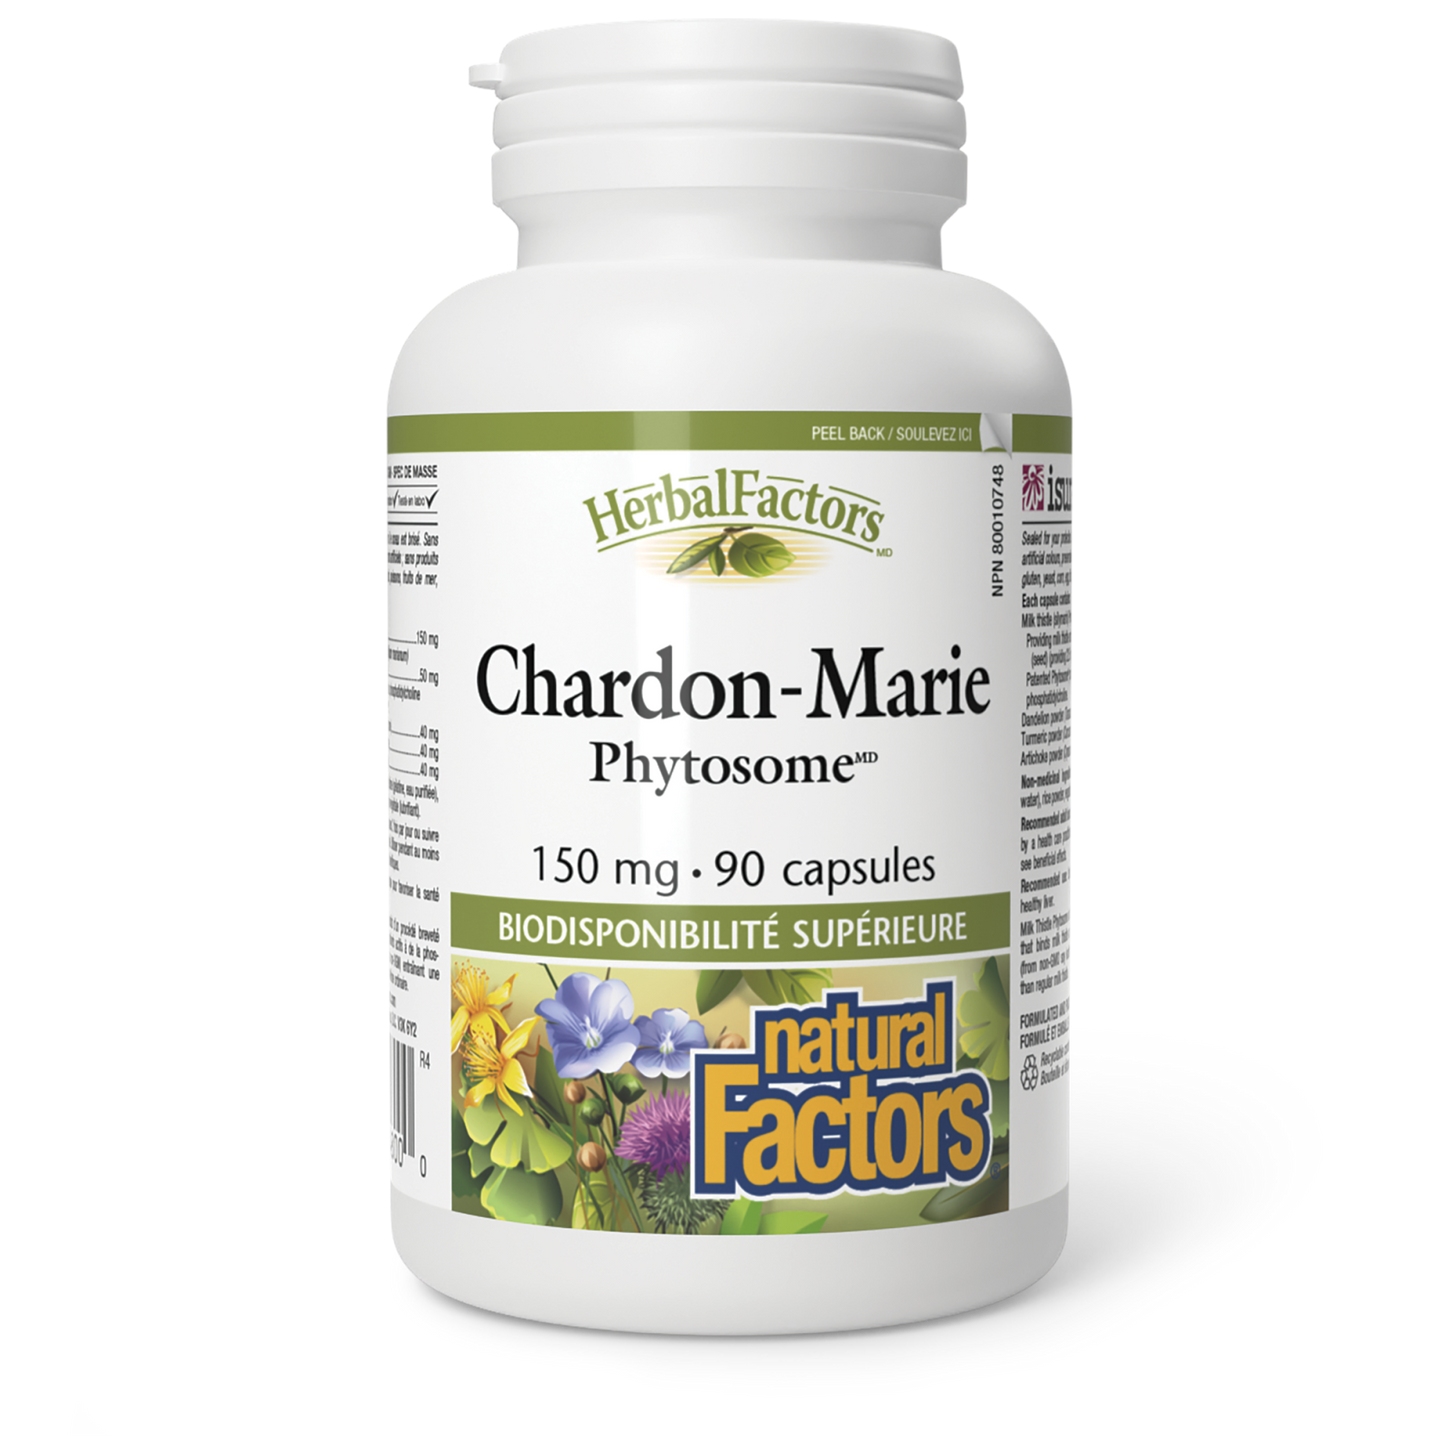 Chardon-Marie Phytosome 150 mg, HerbalFactors, Natural Factors|v|image|4800